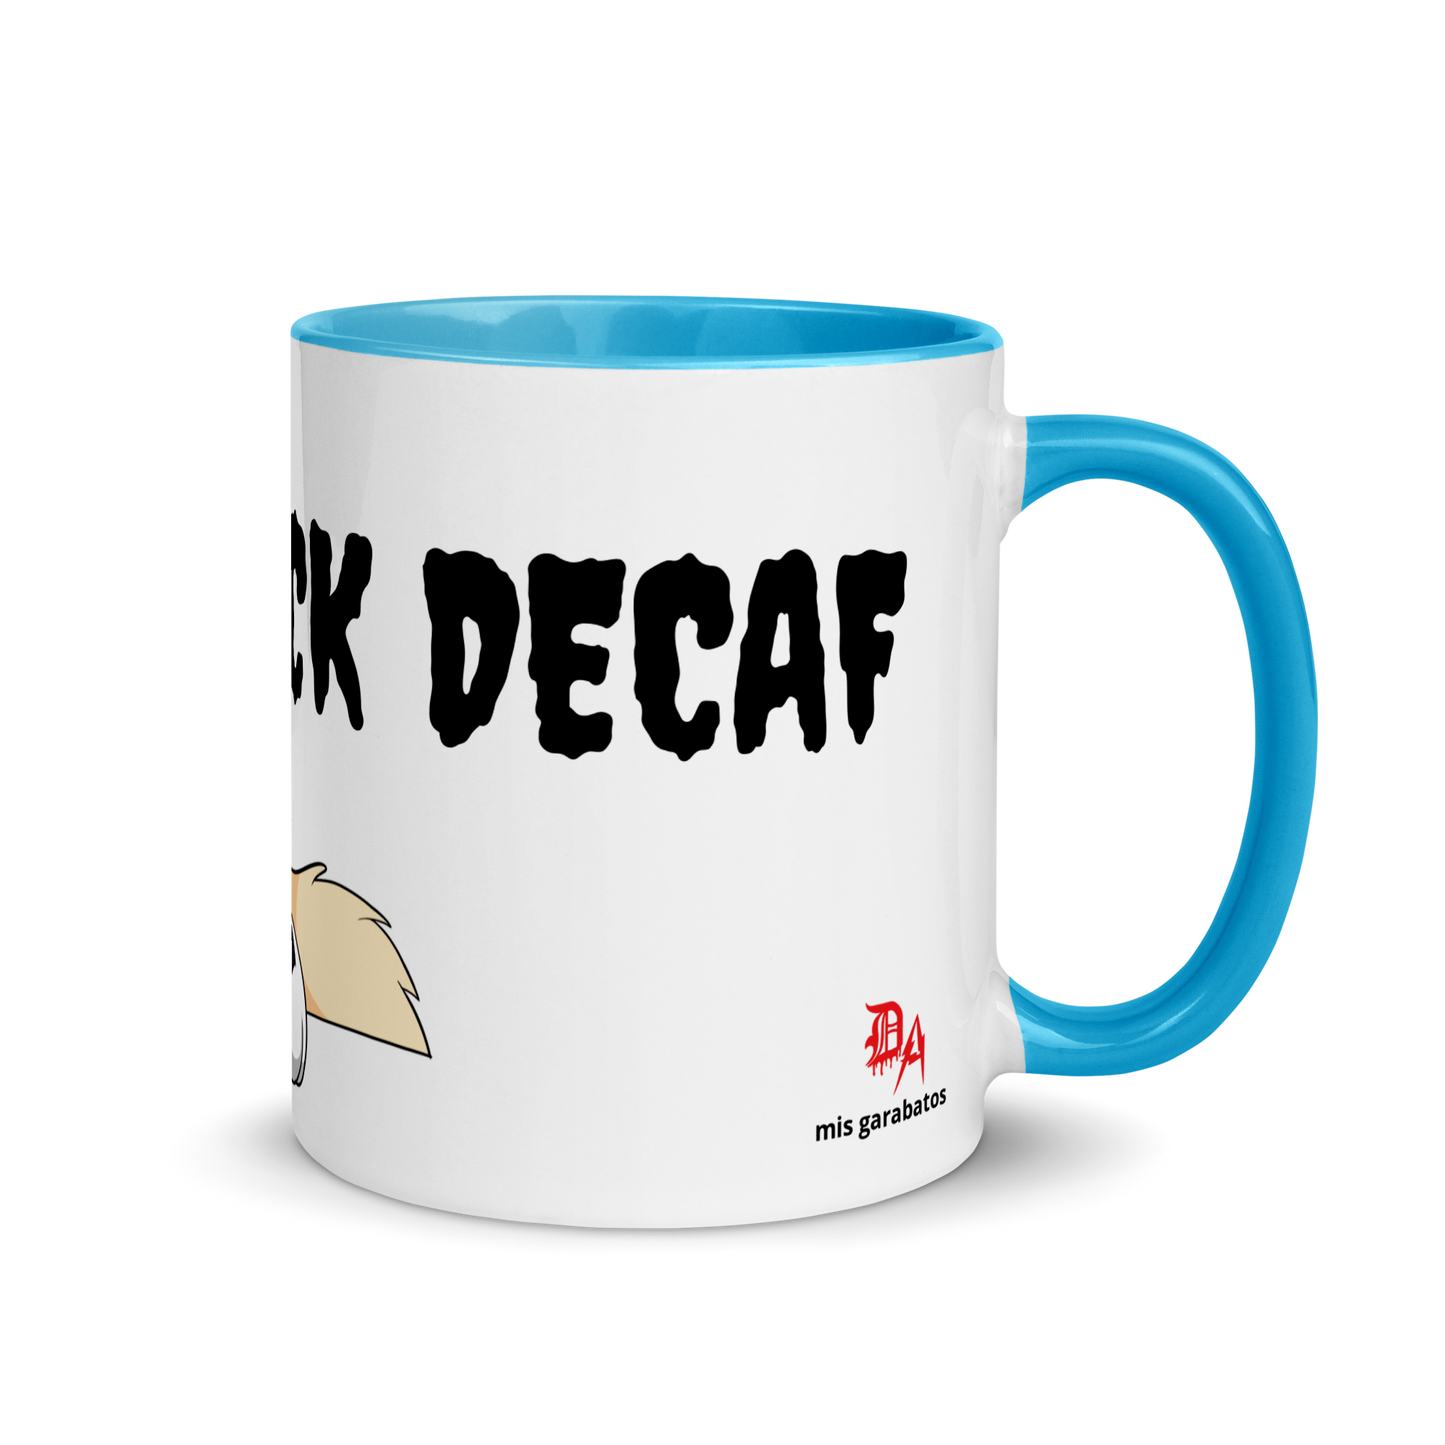 Jesica Giovanetti "Fuck Decaf" Mug